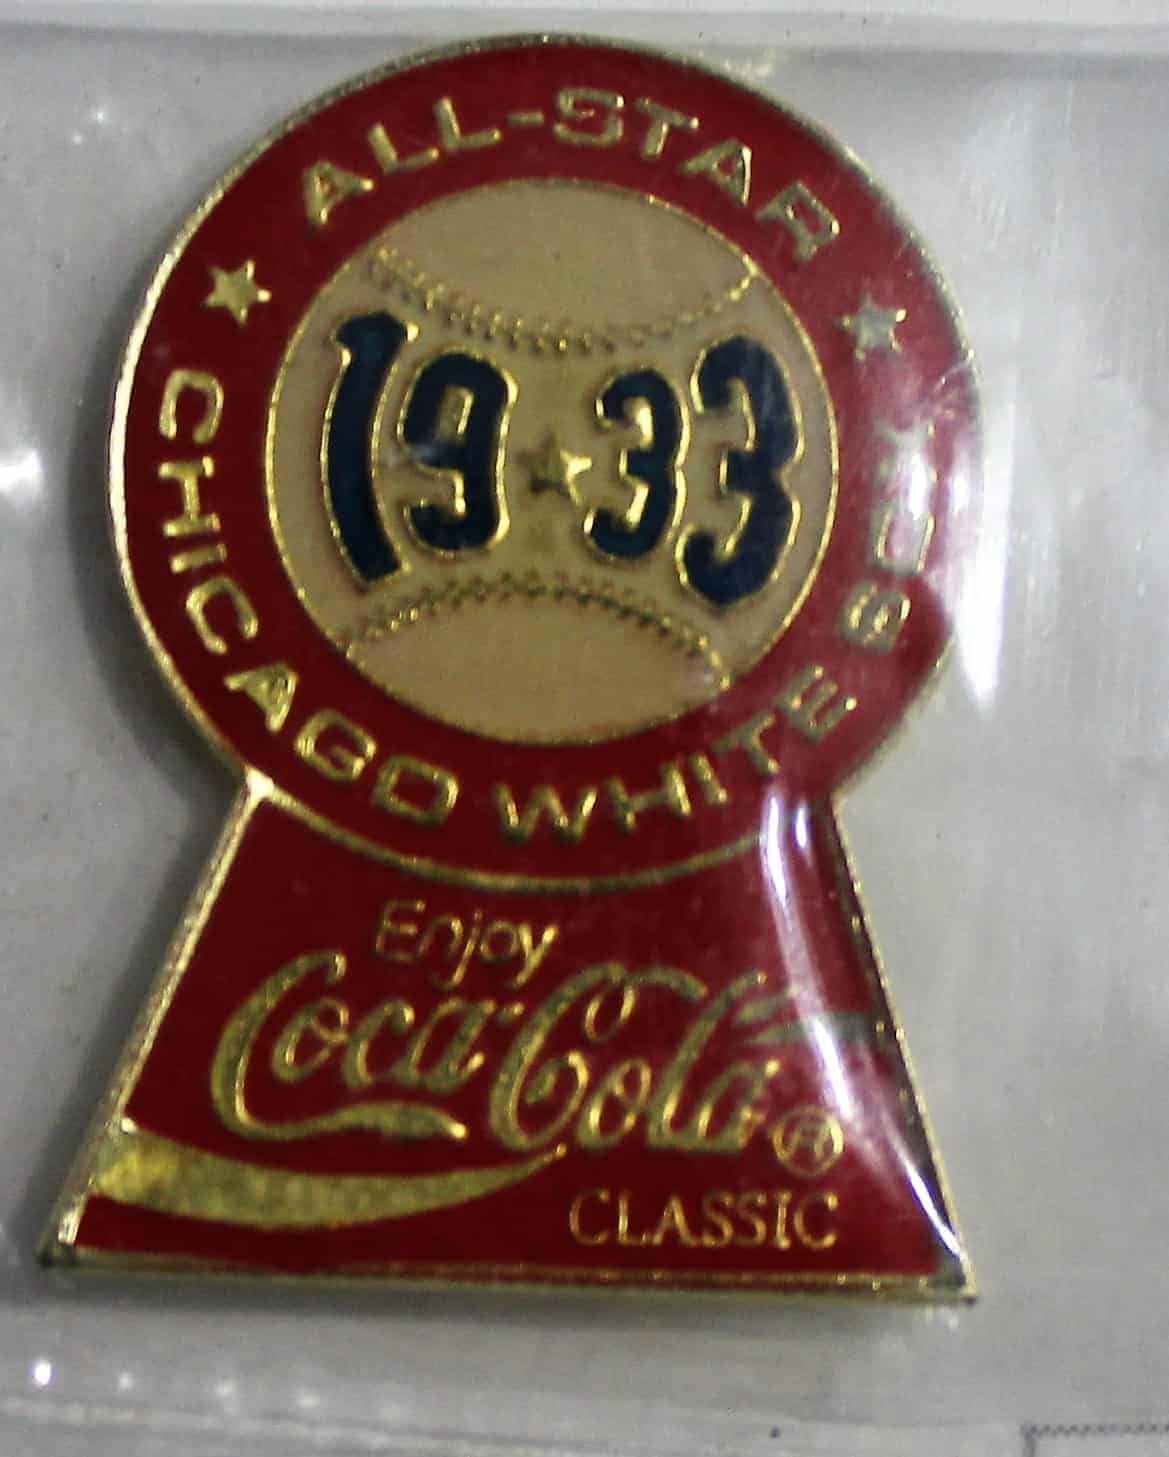 Pin, Coca-Cola White Sox, Comiskey Park Commemorative Pin, NOS 1983